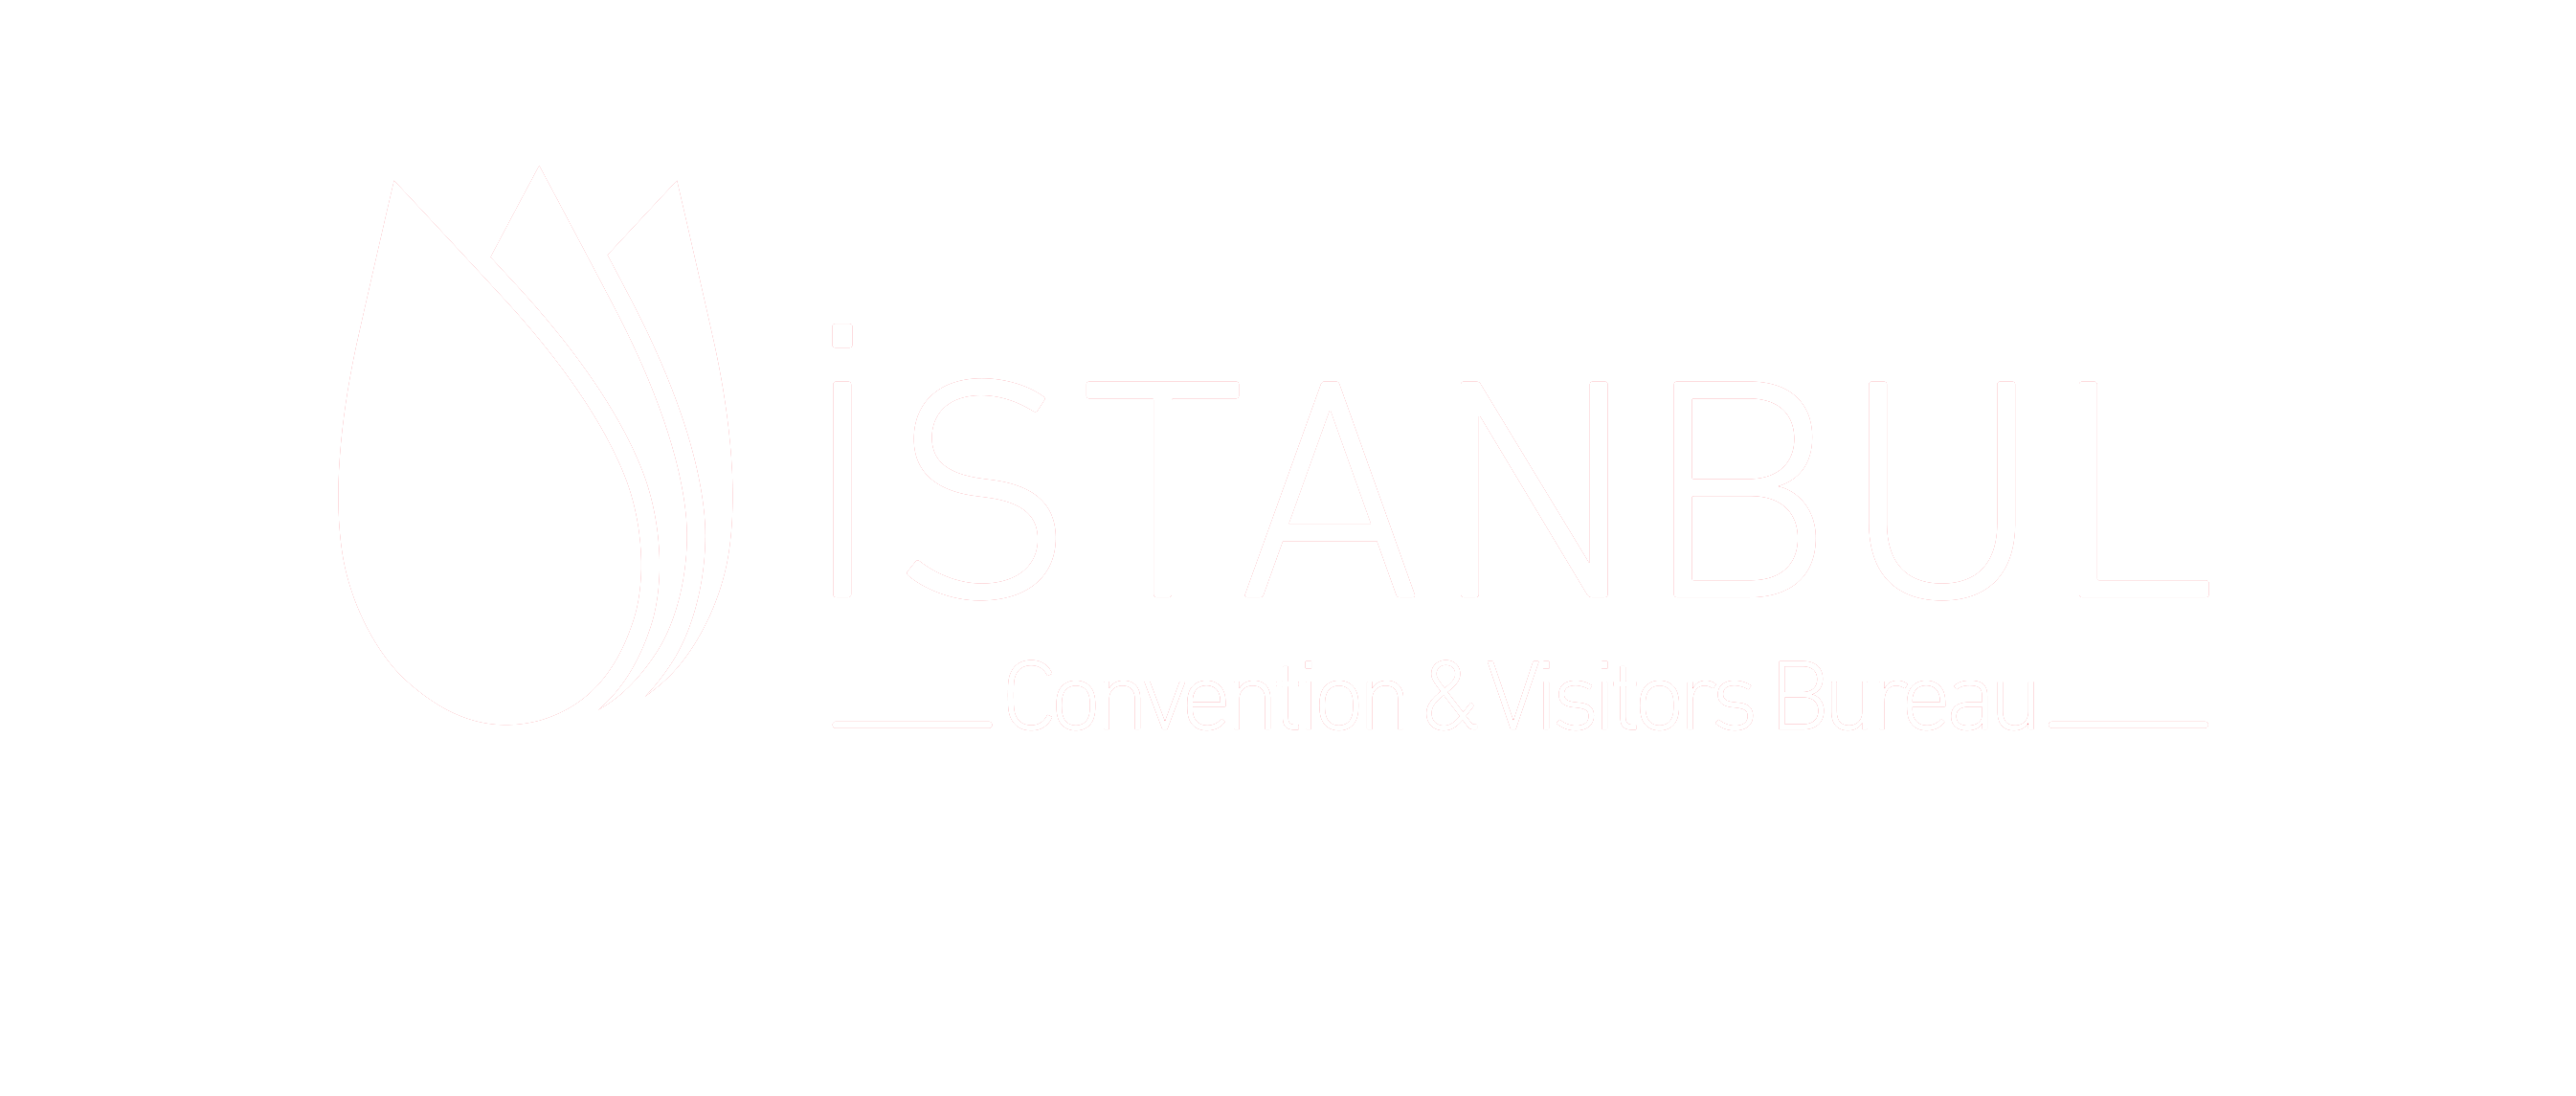 turkey tourist board contact